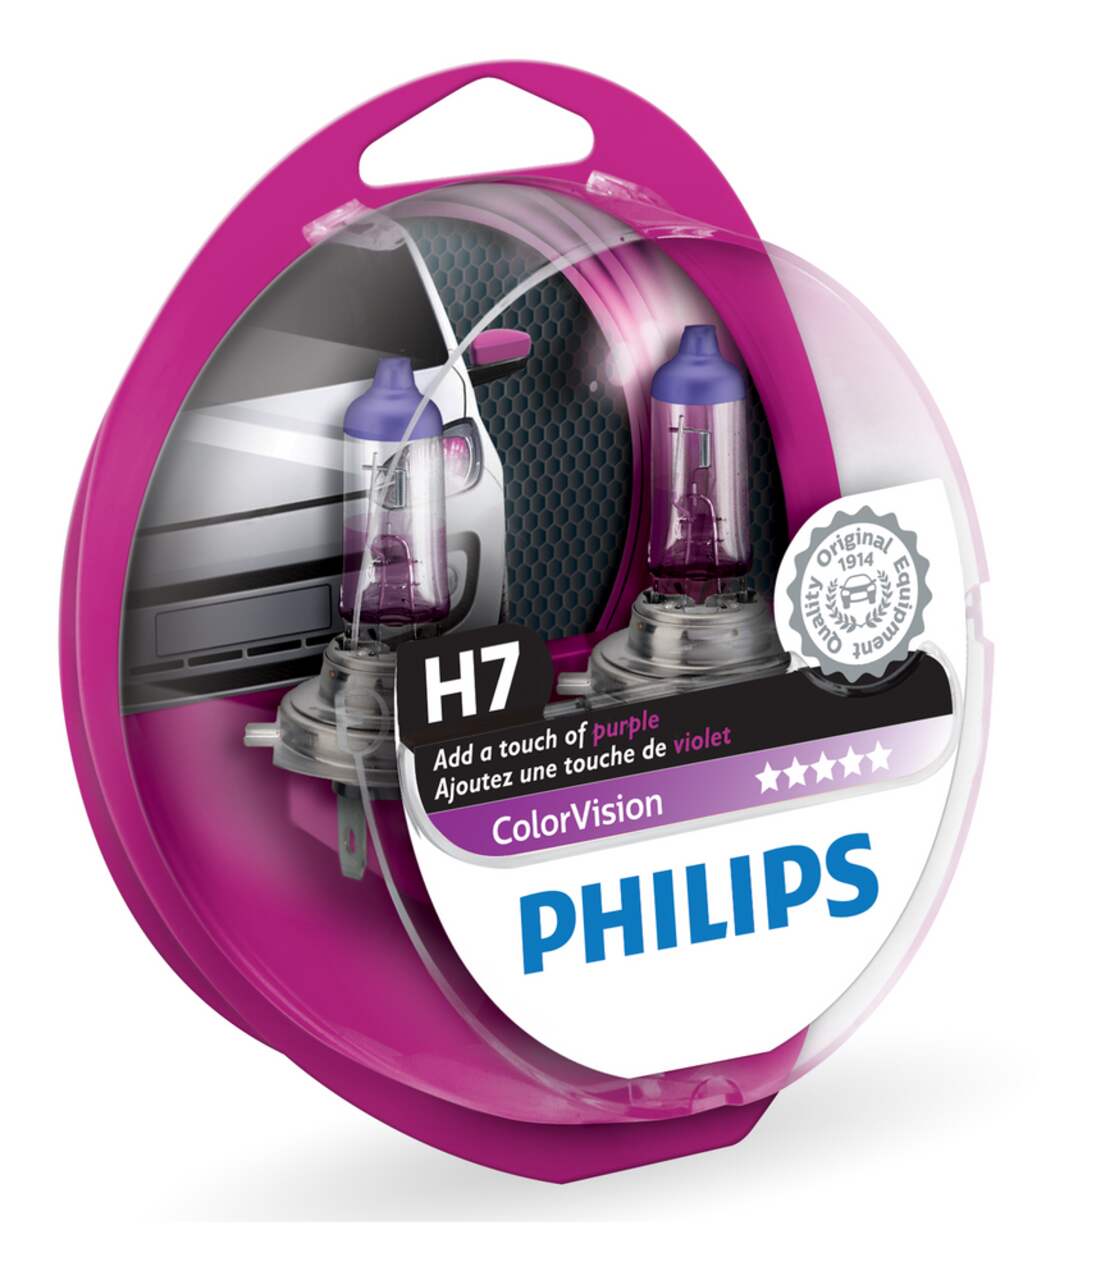 H7 Purple Philips ColorVision Headlight Bulbs, 2-pk